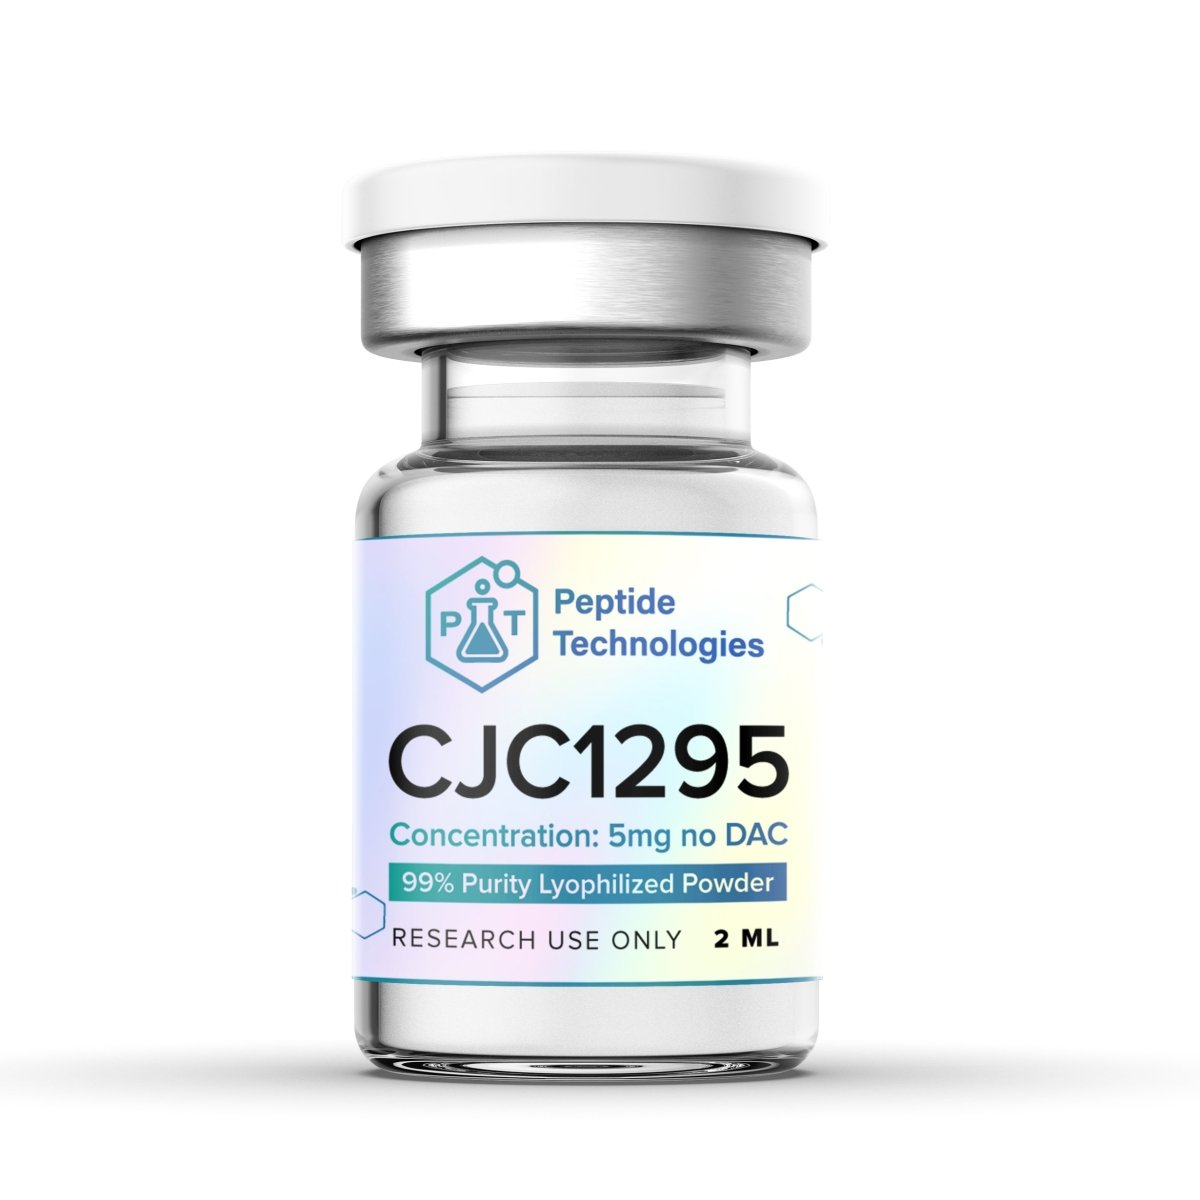 CJC1295 no DAC 5mg - Peptide Technologies - PT-CJC1295NODAC-5-1 -